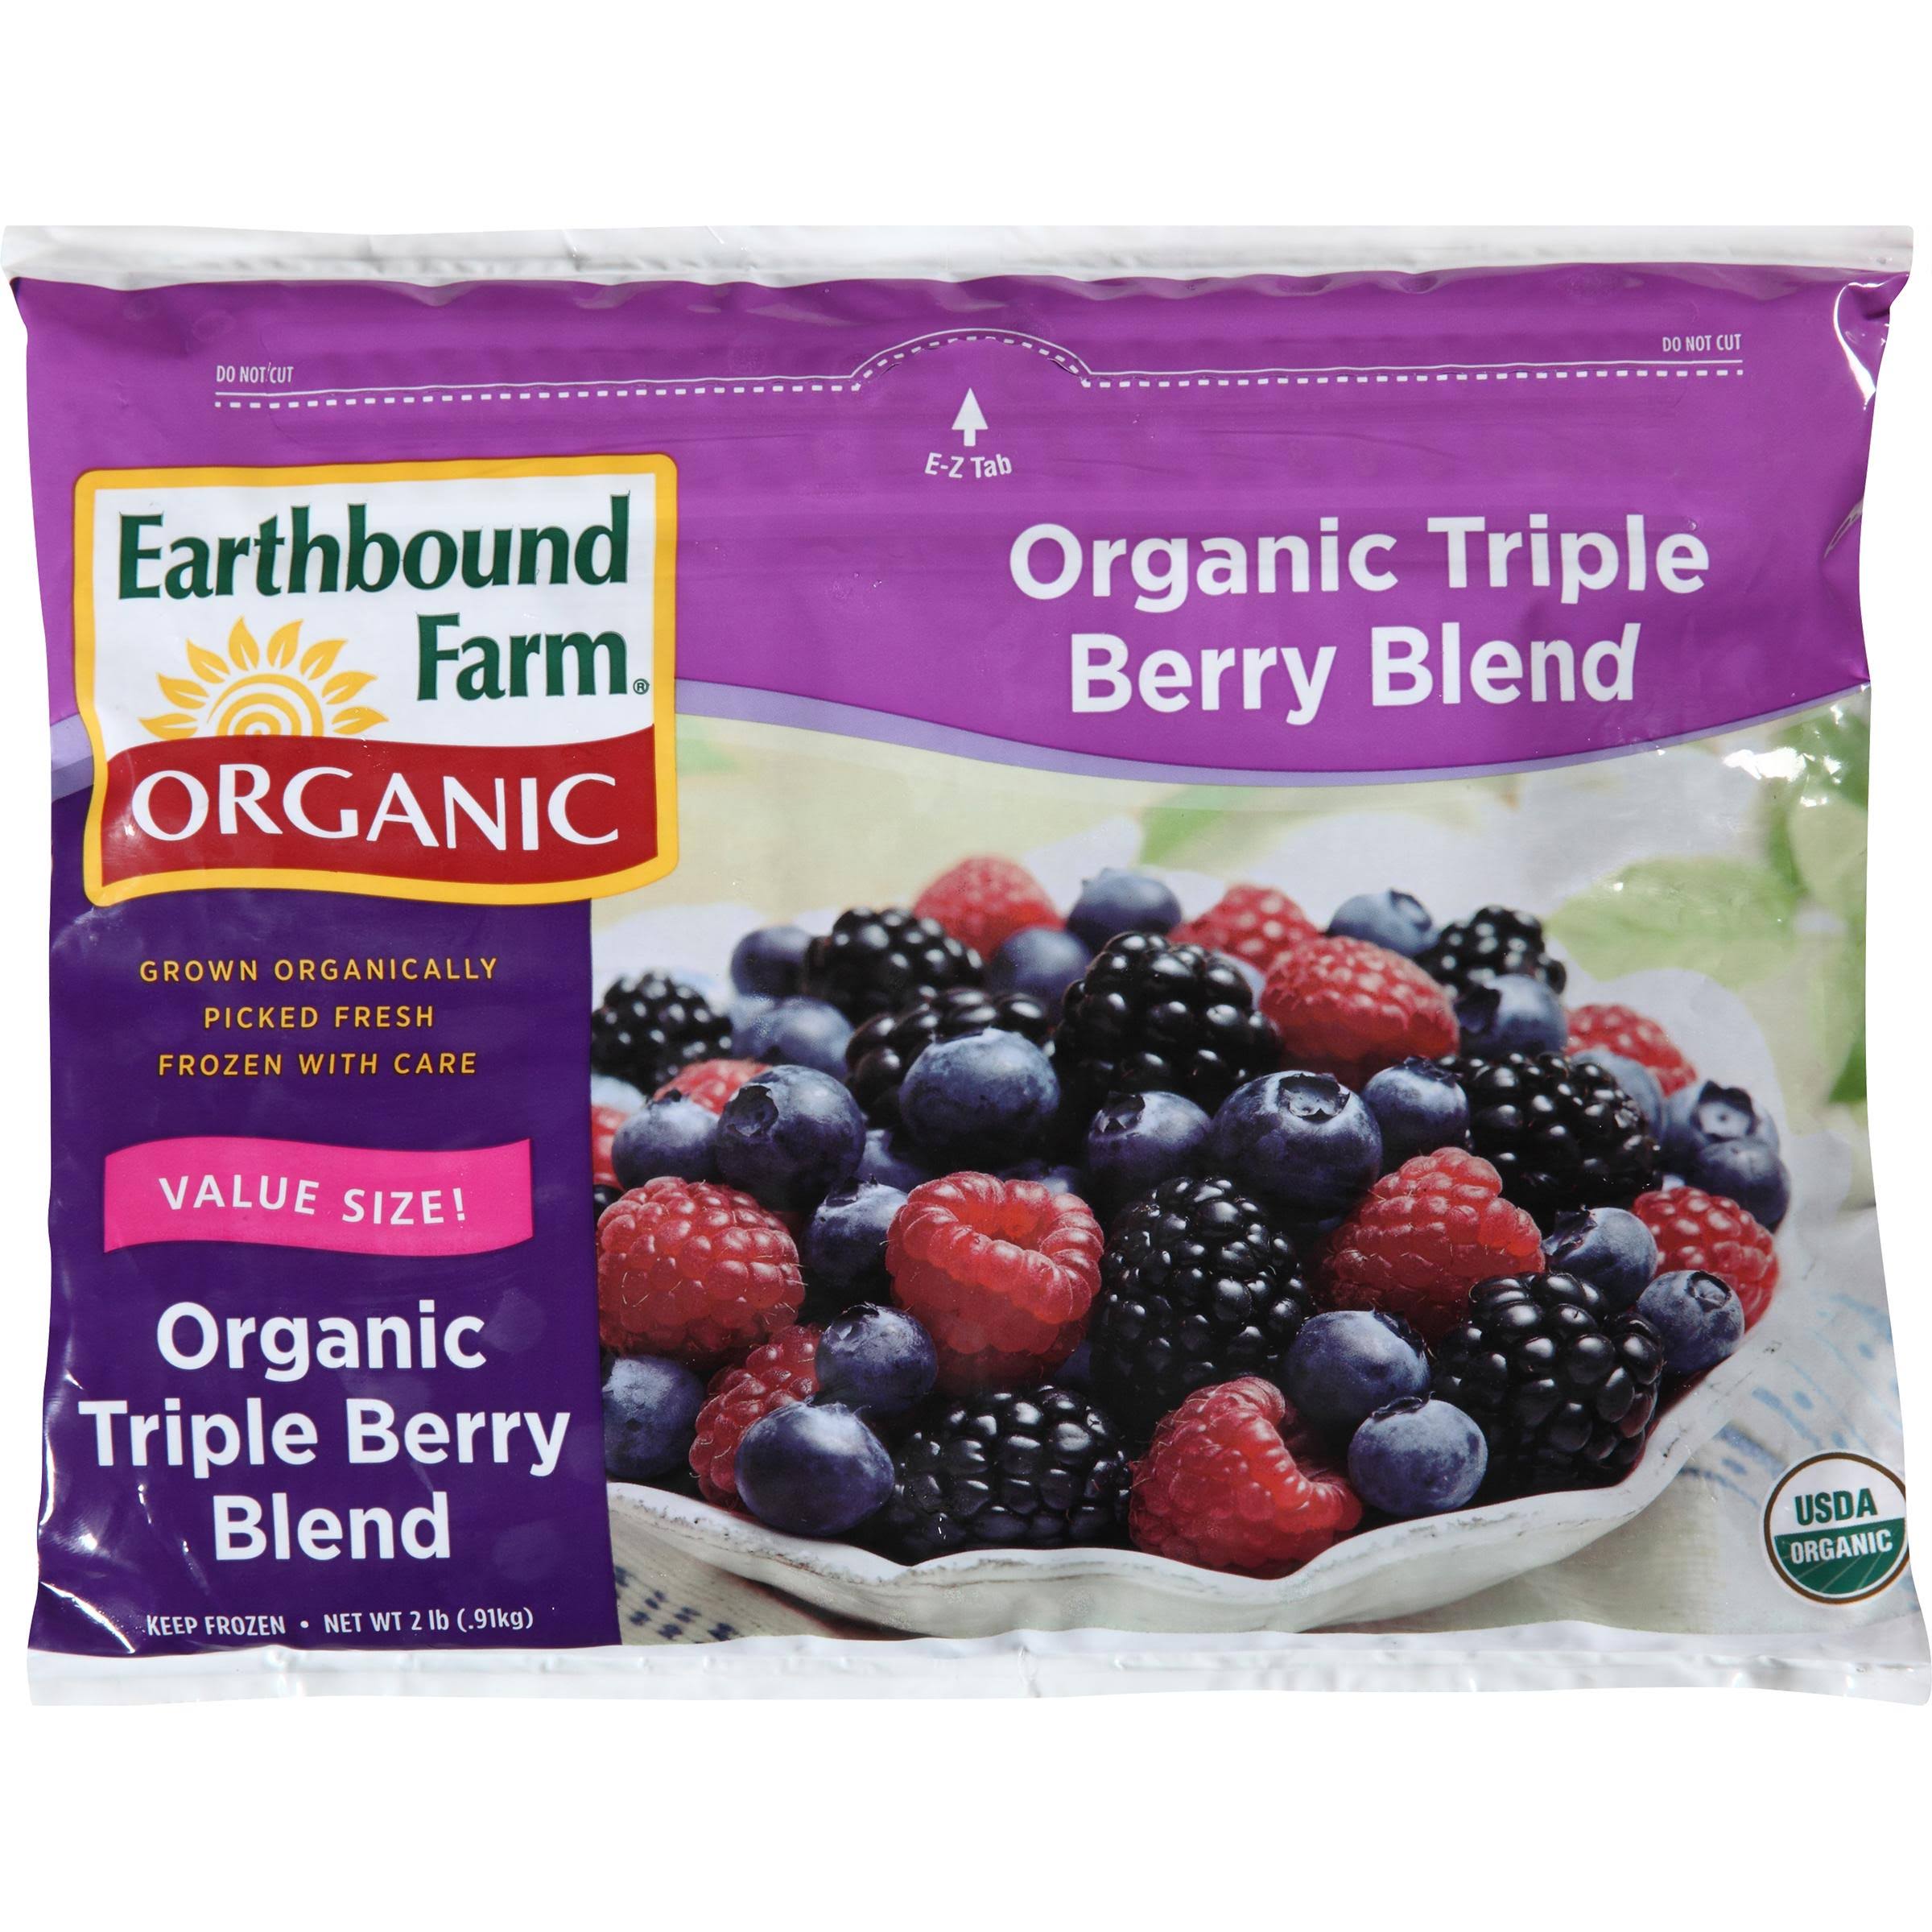 Earthbound Farm Organic Triple Berry Blend